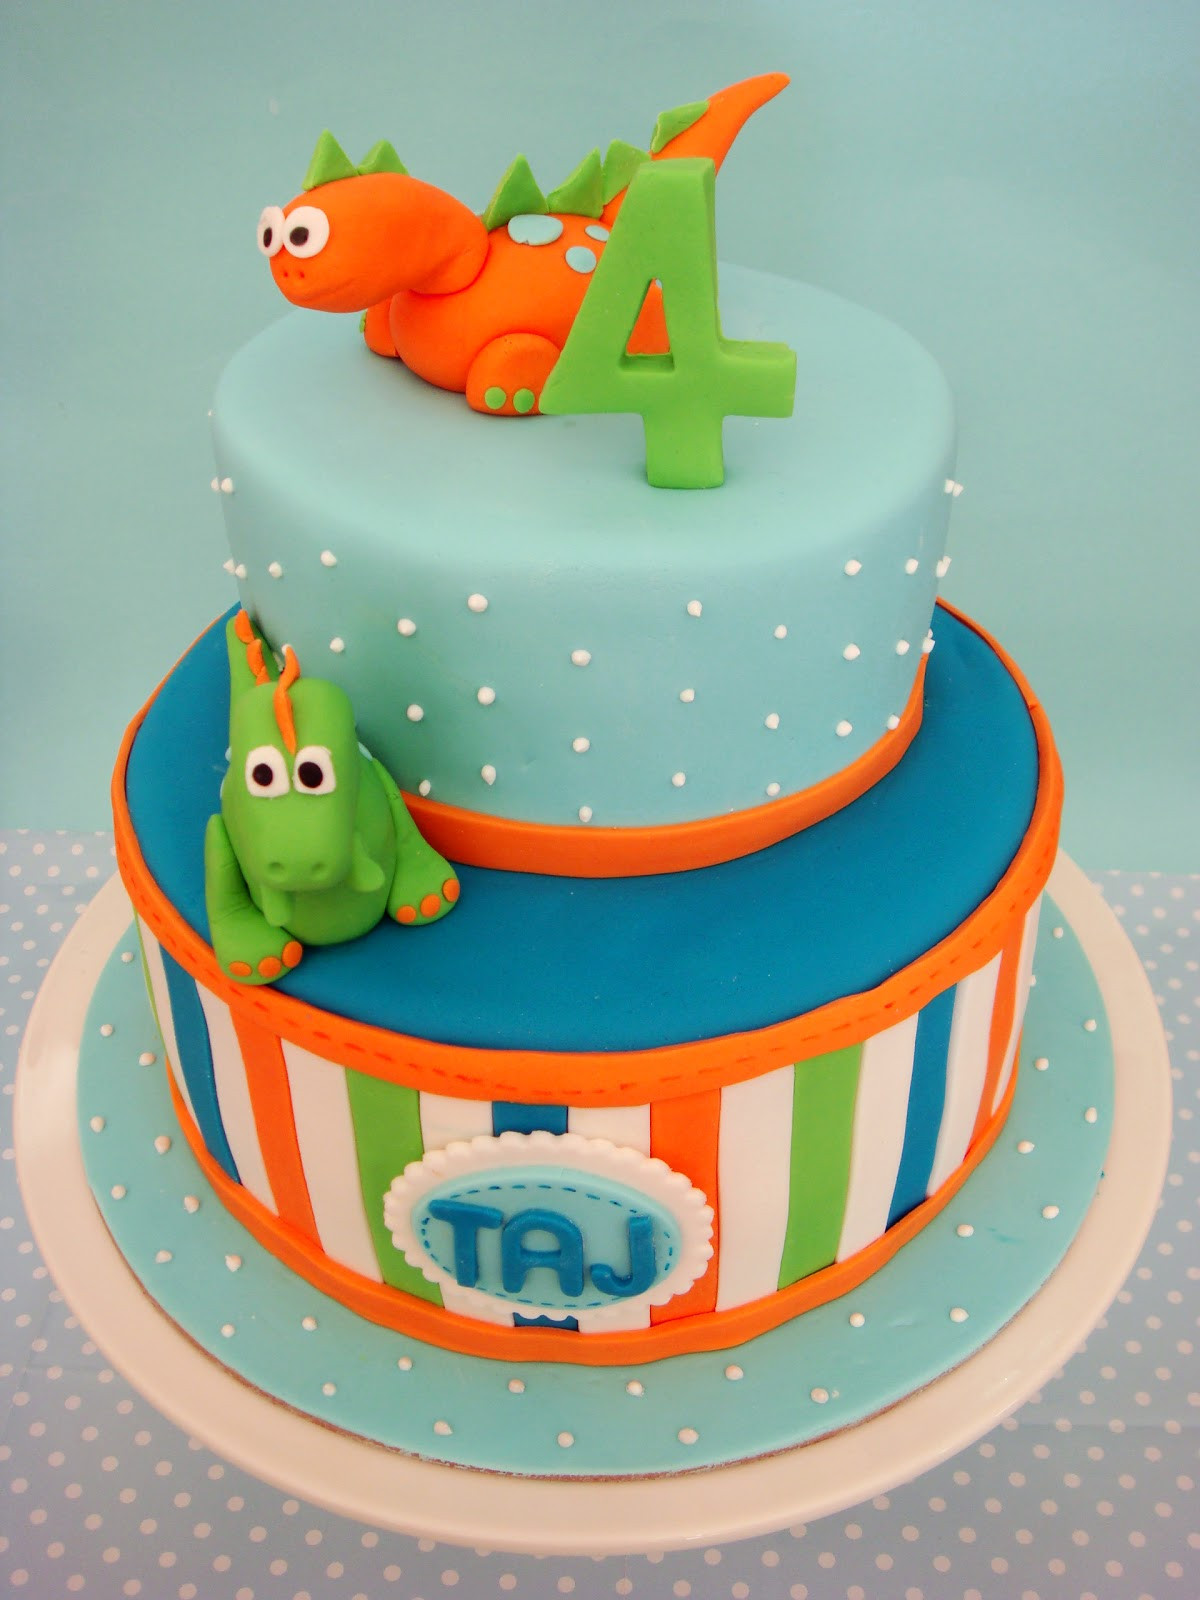 Best ideas about Dinosaur Birthday Cake
. Save or Pin butter hearts sugar Dinosaur Birthday Cake Now.